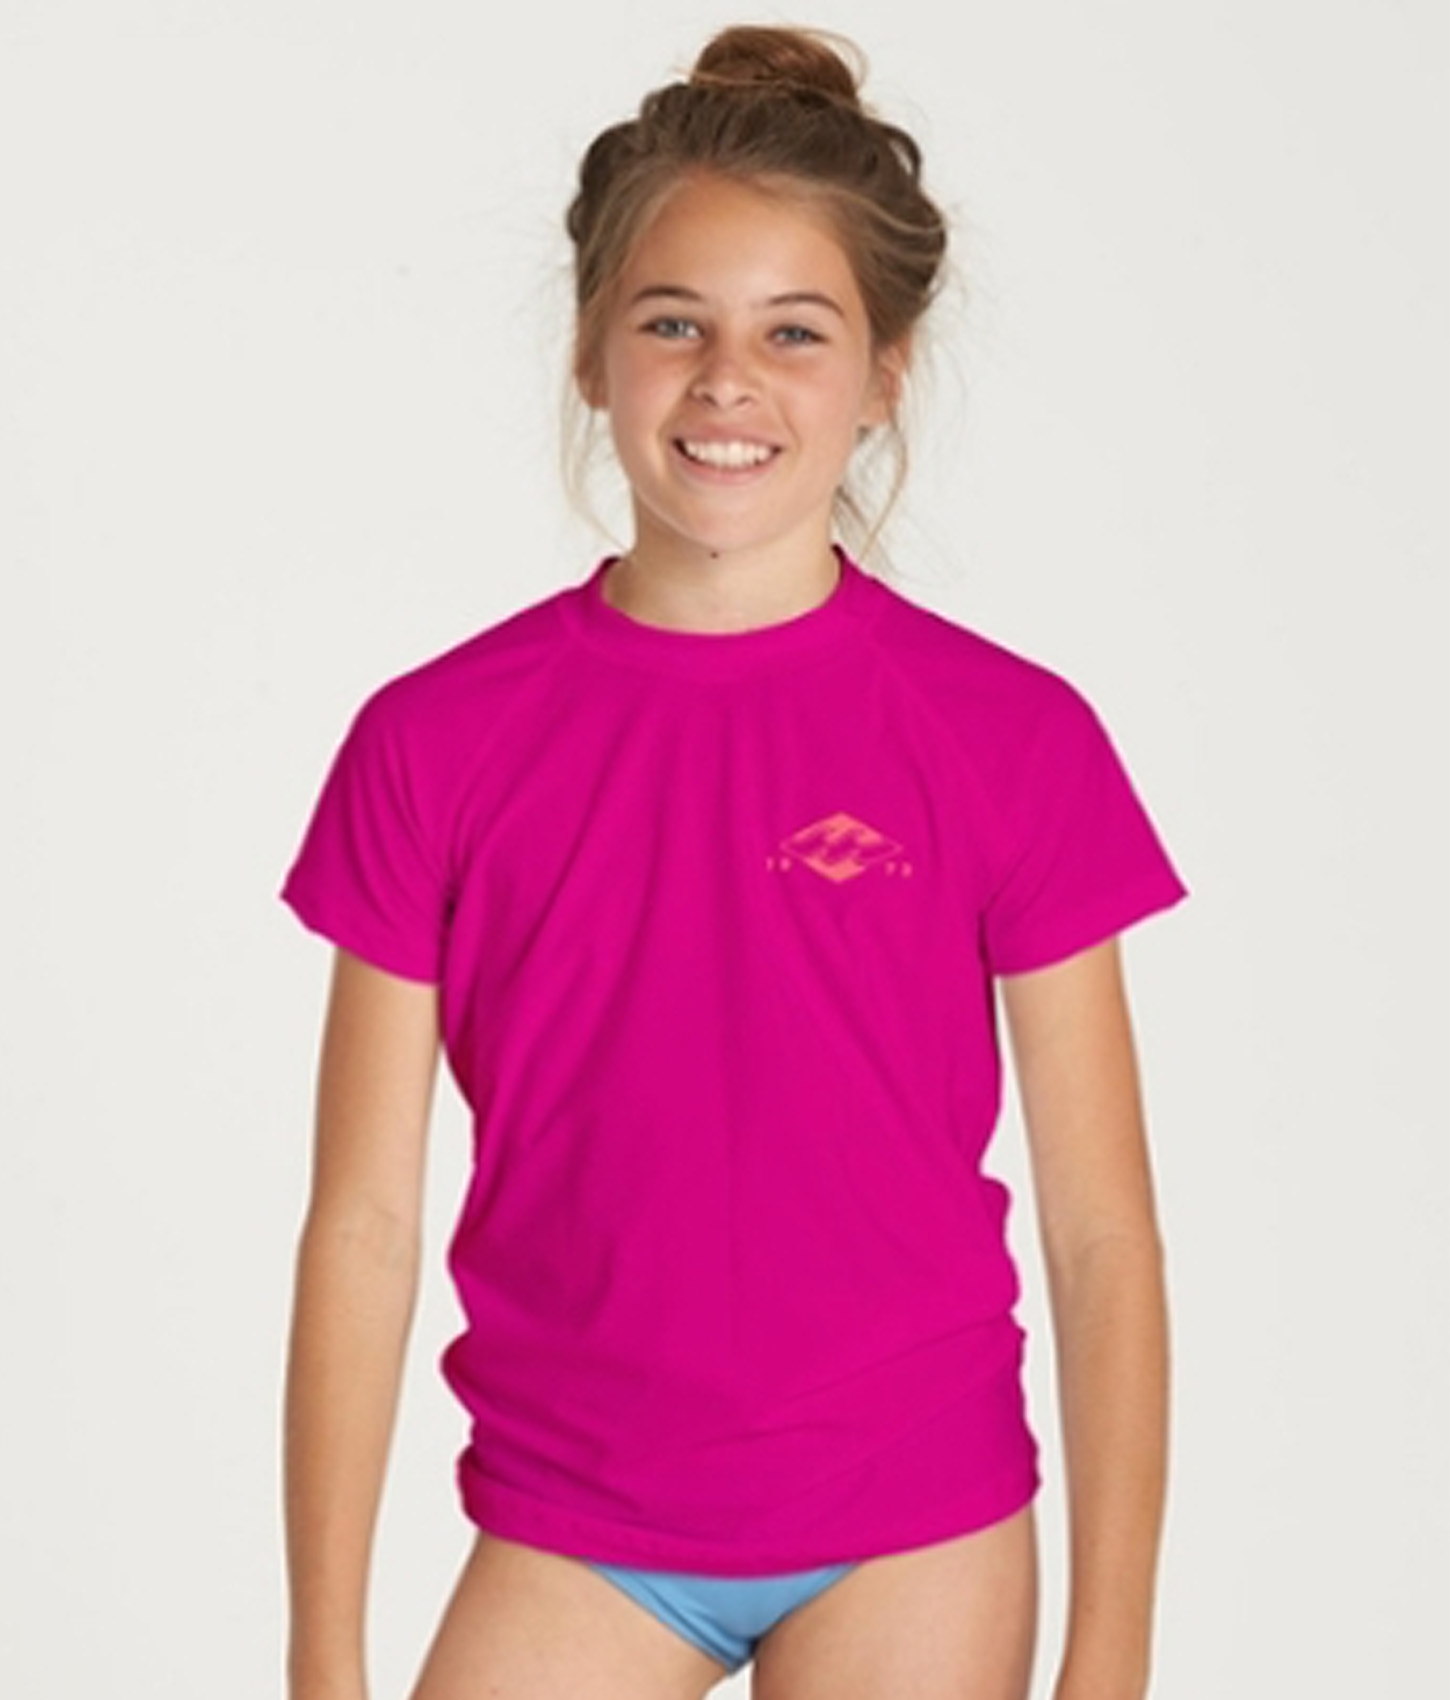 Girls Surf Day Performance Shirt Sleeve Rashguard